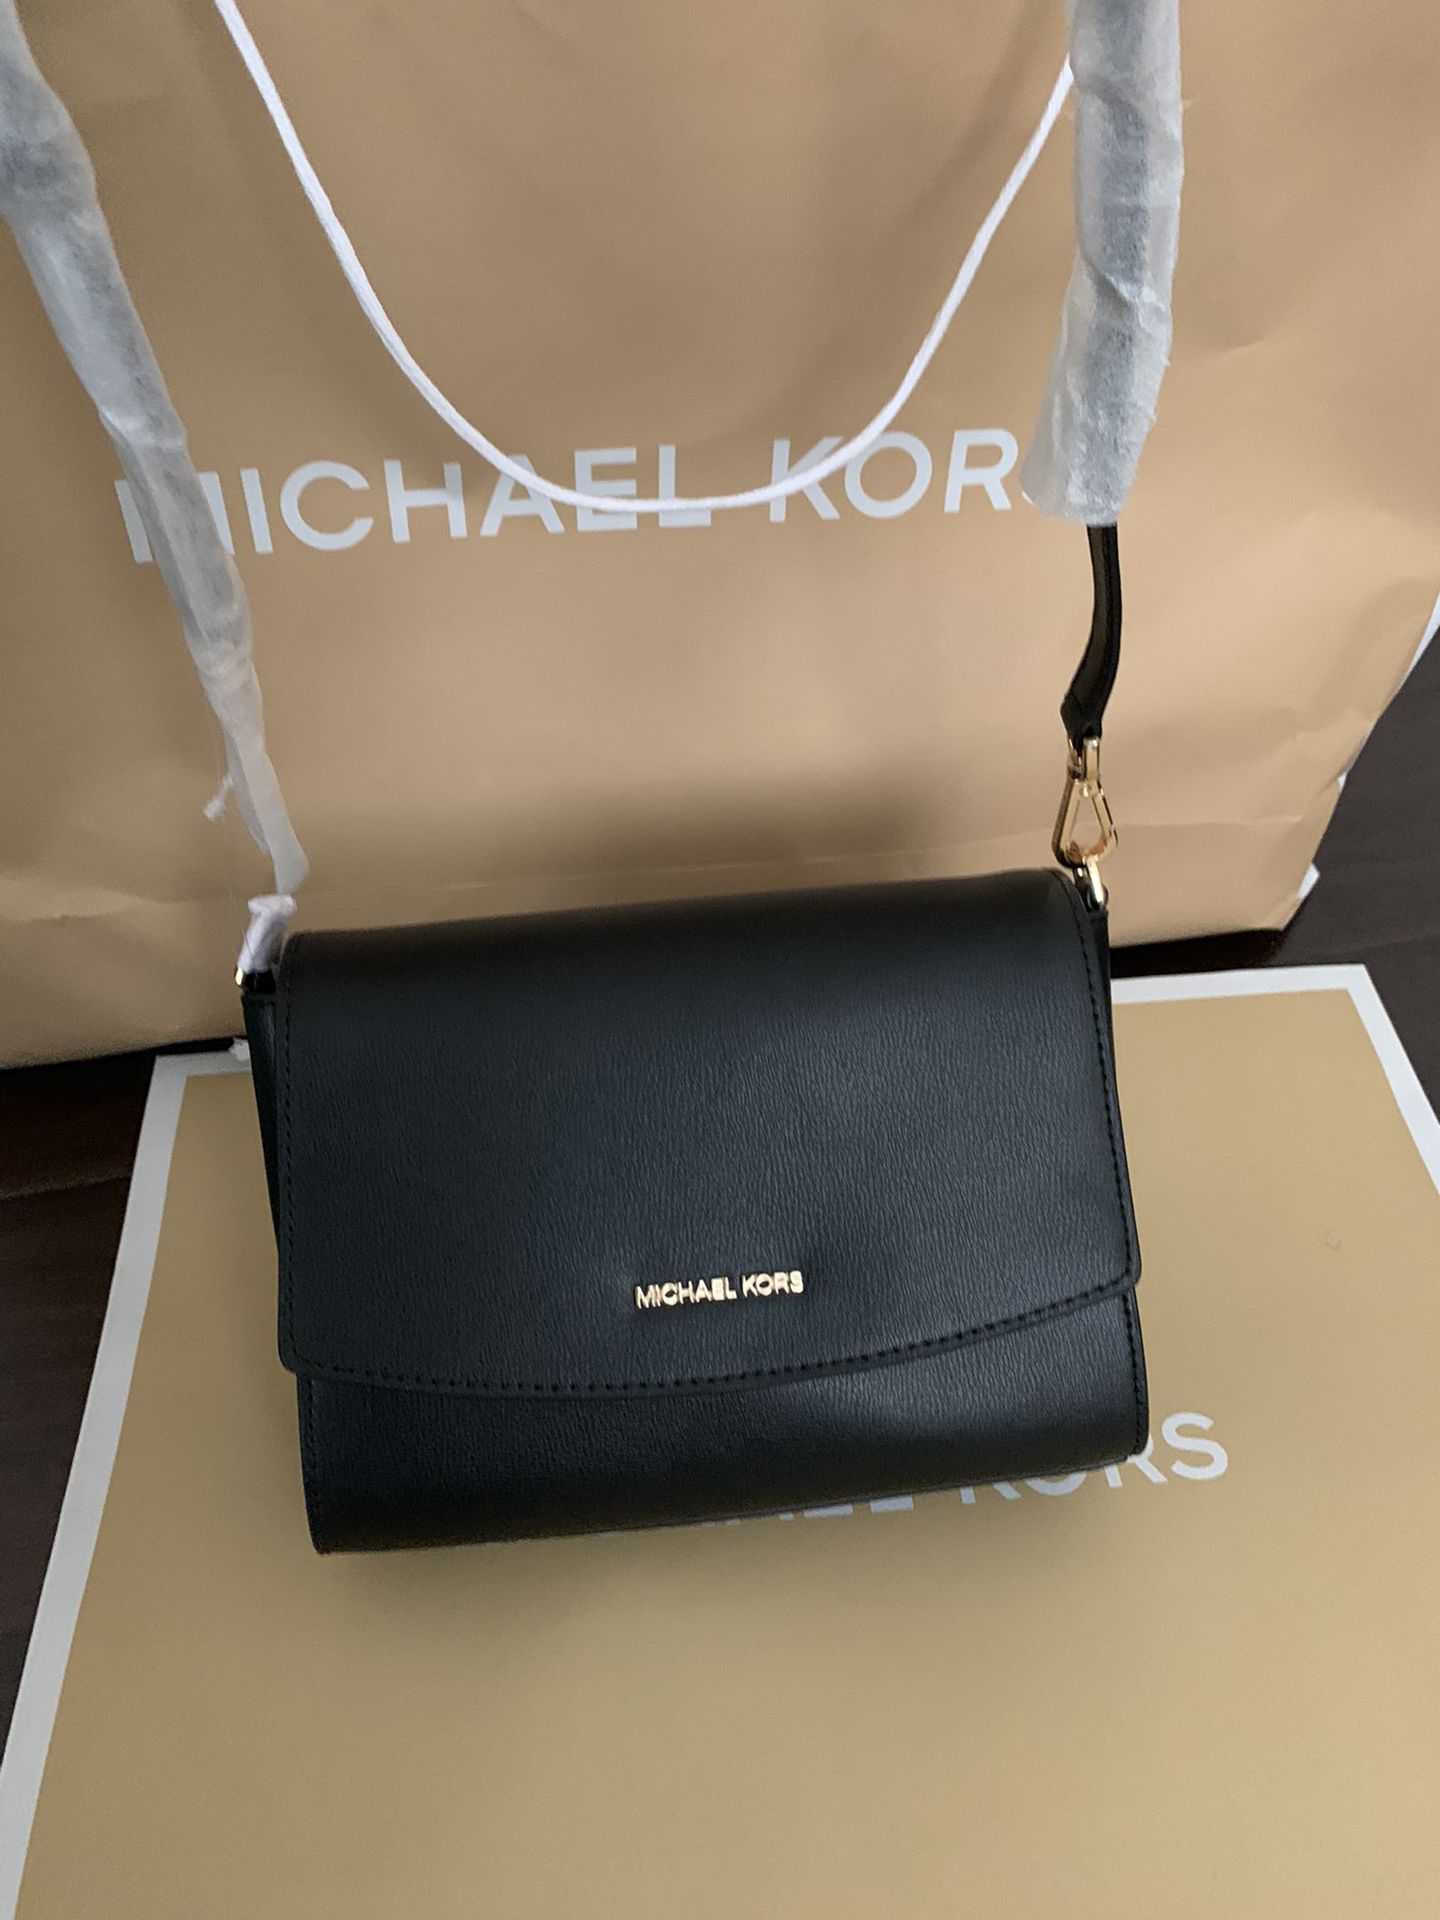 Brand new!!! 💯Real!!! Michael kors black crossbody purse